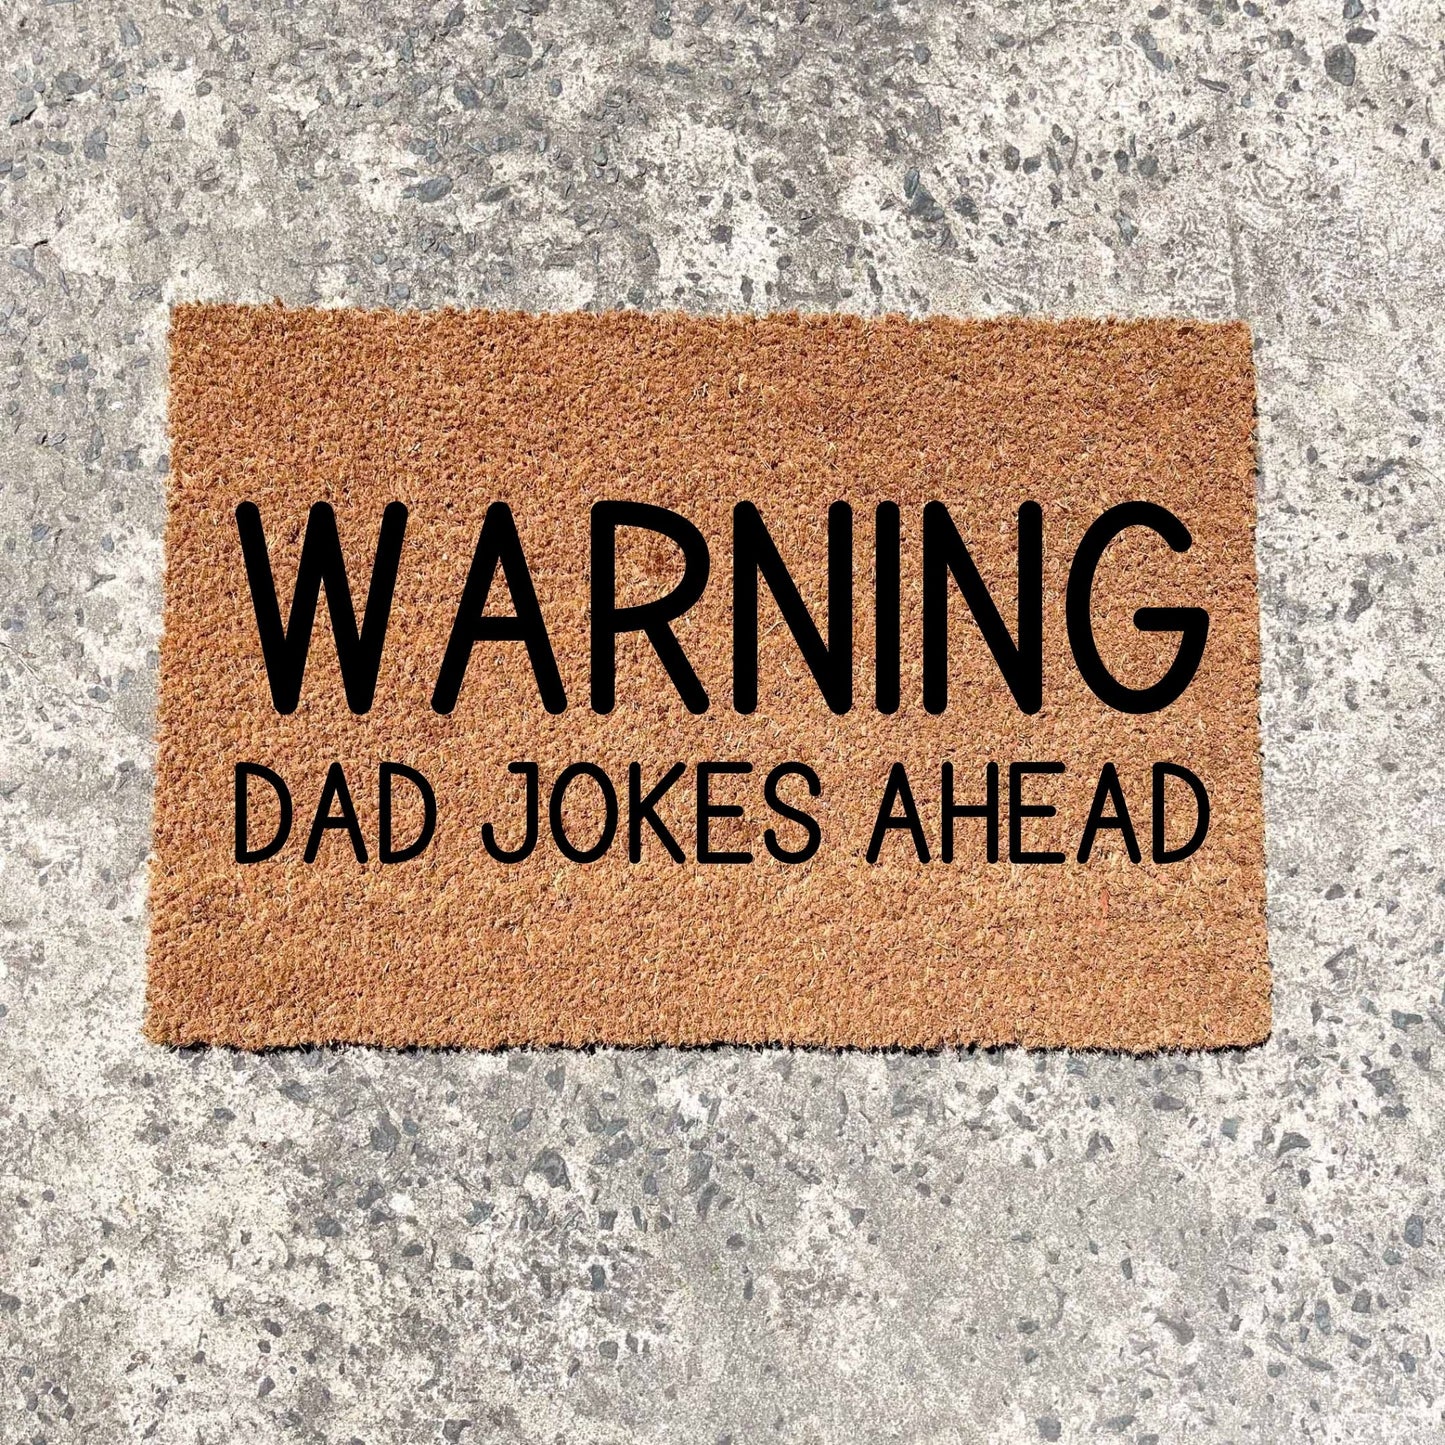 Warning dad jokes ahead doormat, fathers day gift, gifts for him, birthday gift, dad doormat, grandpa doormat